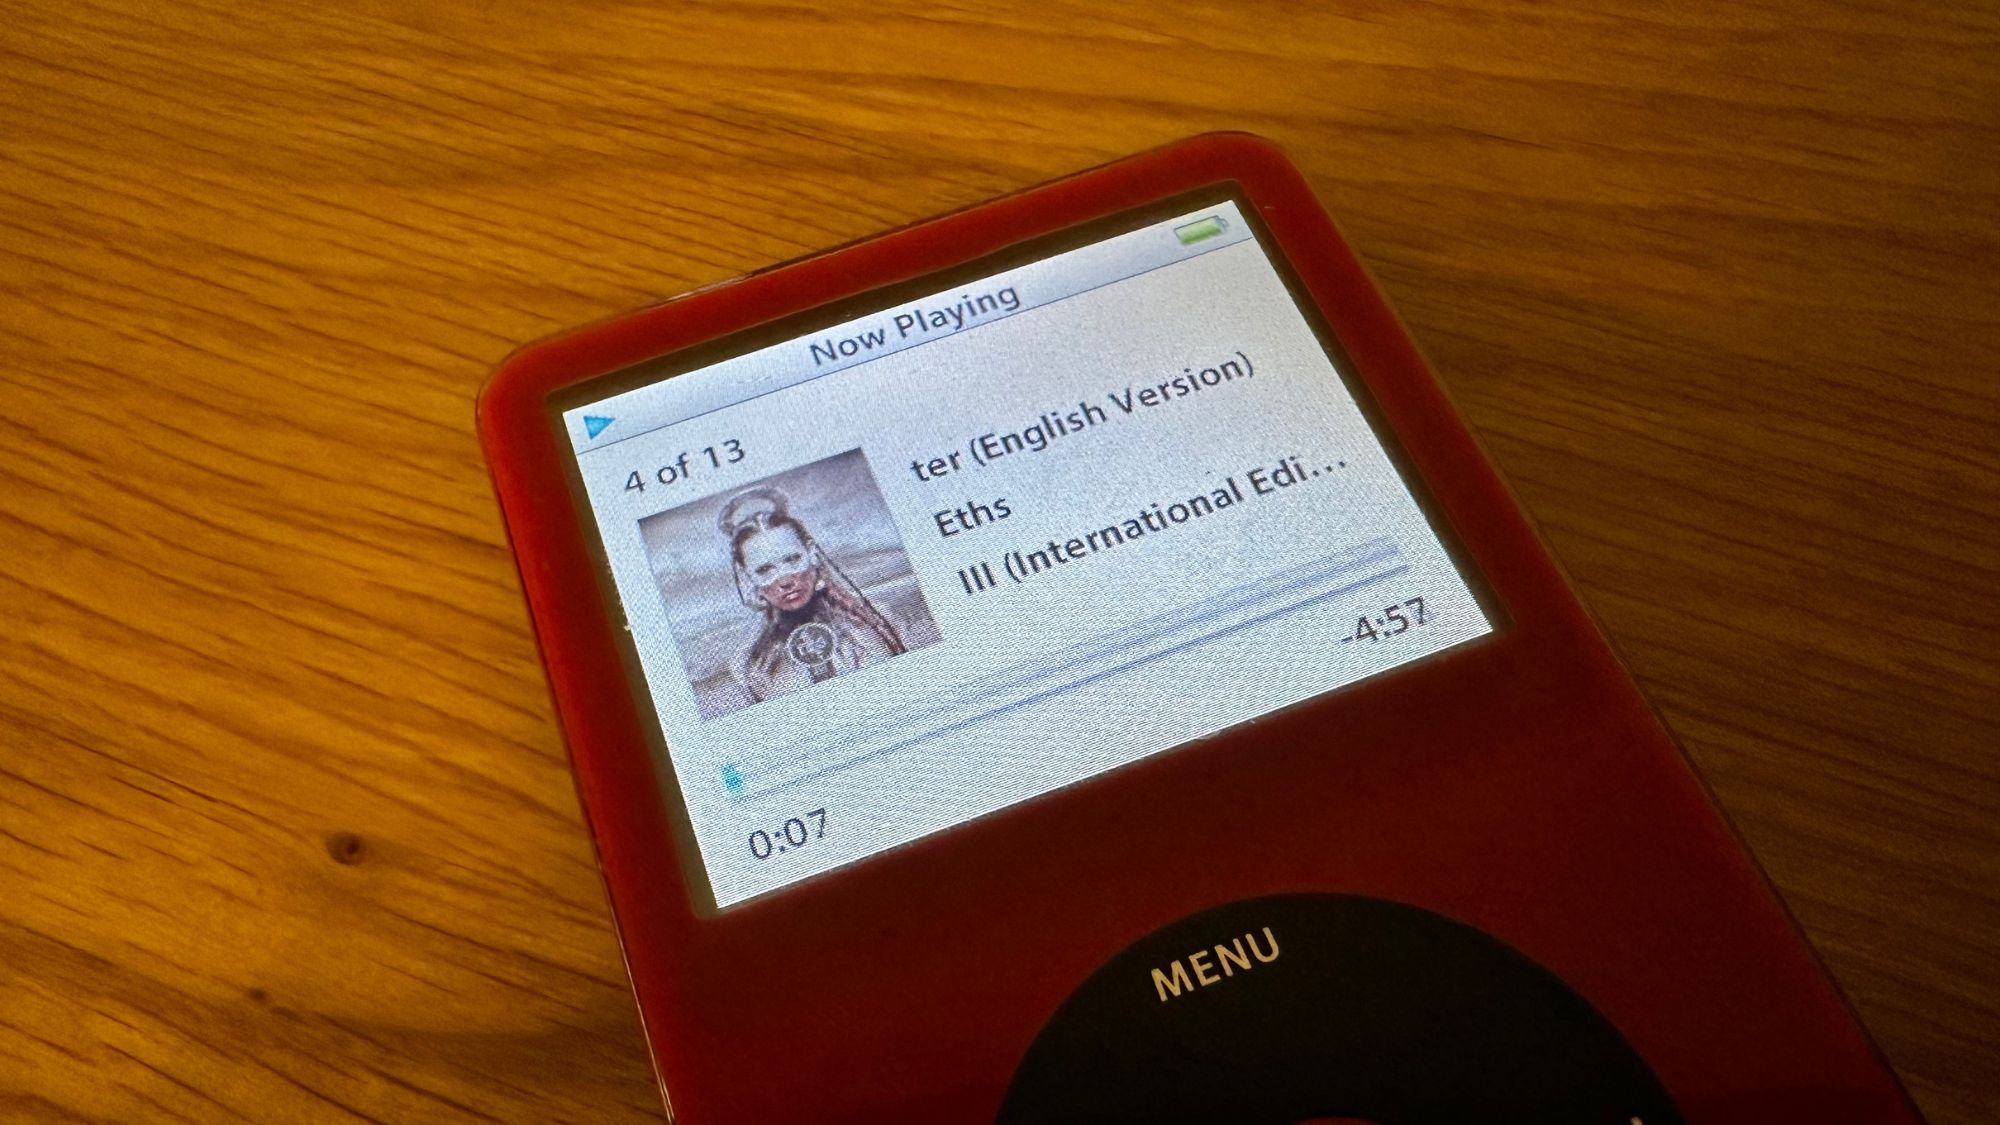 iPod Video screen closeup